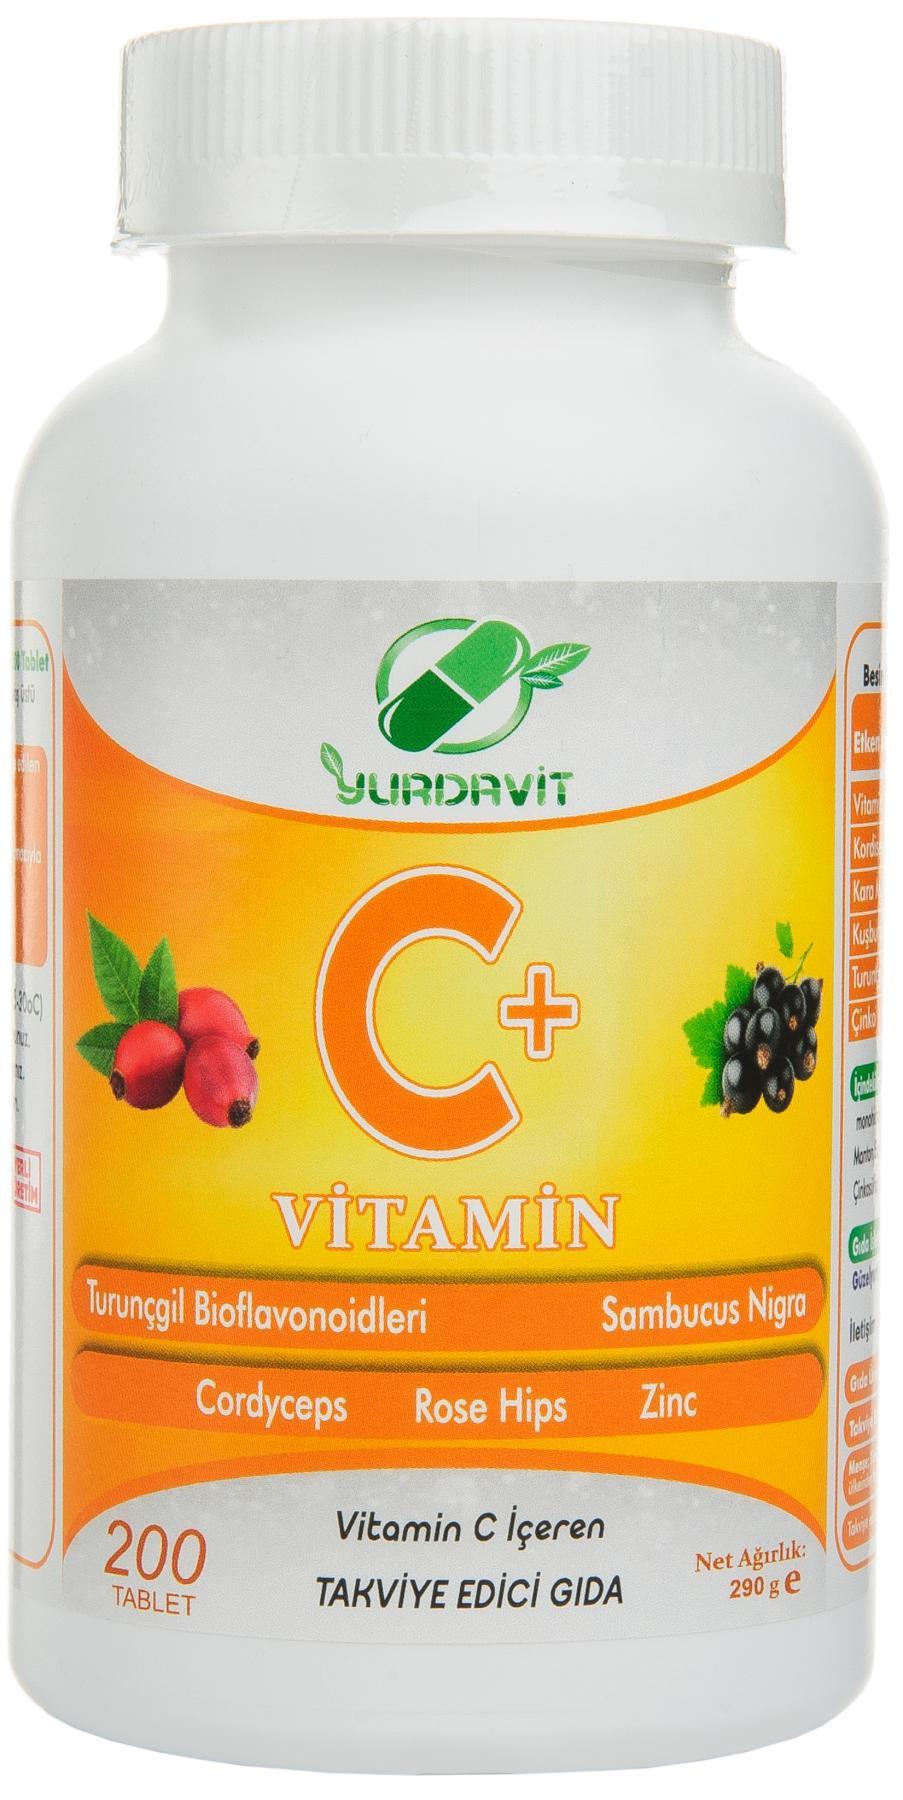 Yurdavit Çinko Sade Unisex Vitamin 200 Tablet